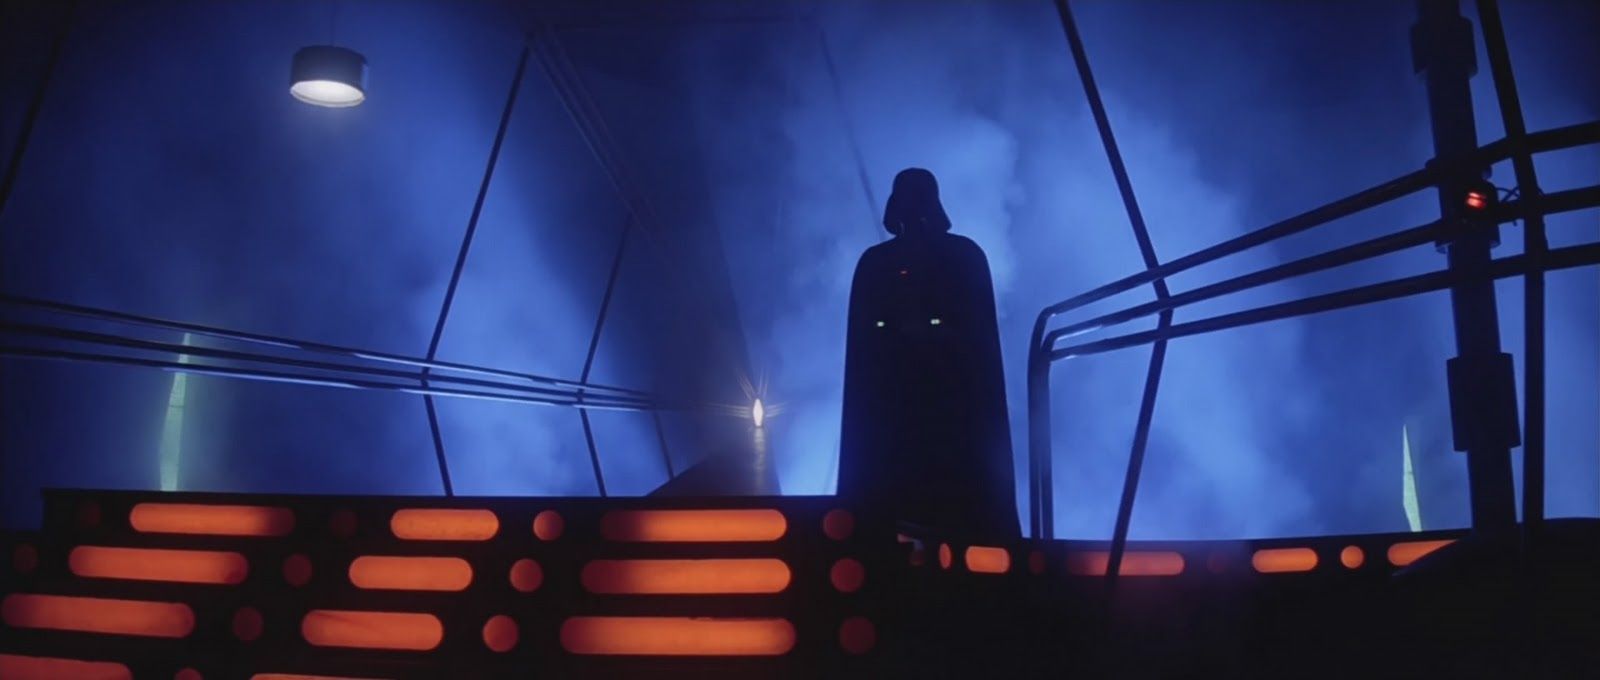 Star Wars Darth Vader 2 Android Wallpaper Strikes Back Vader Bespin